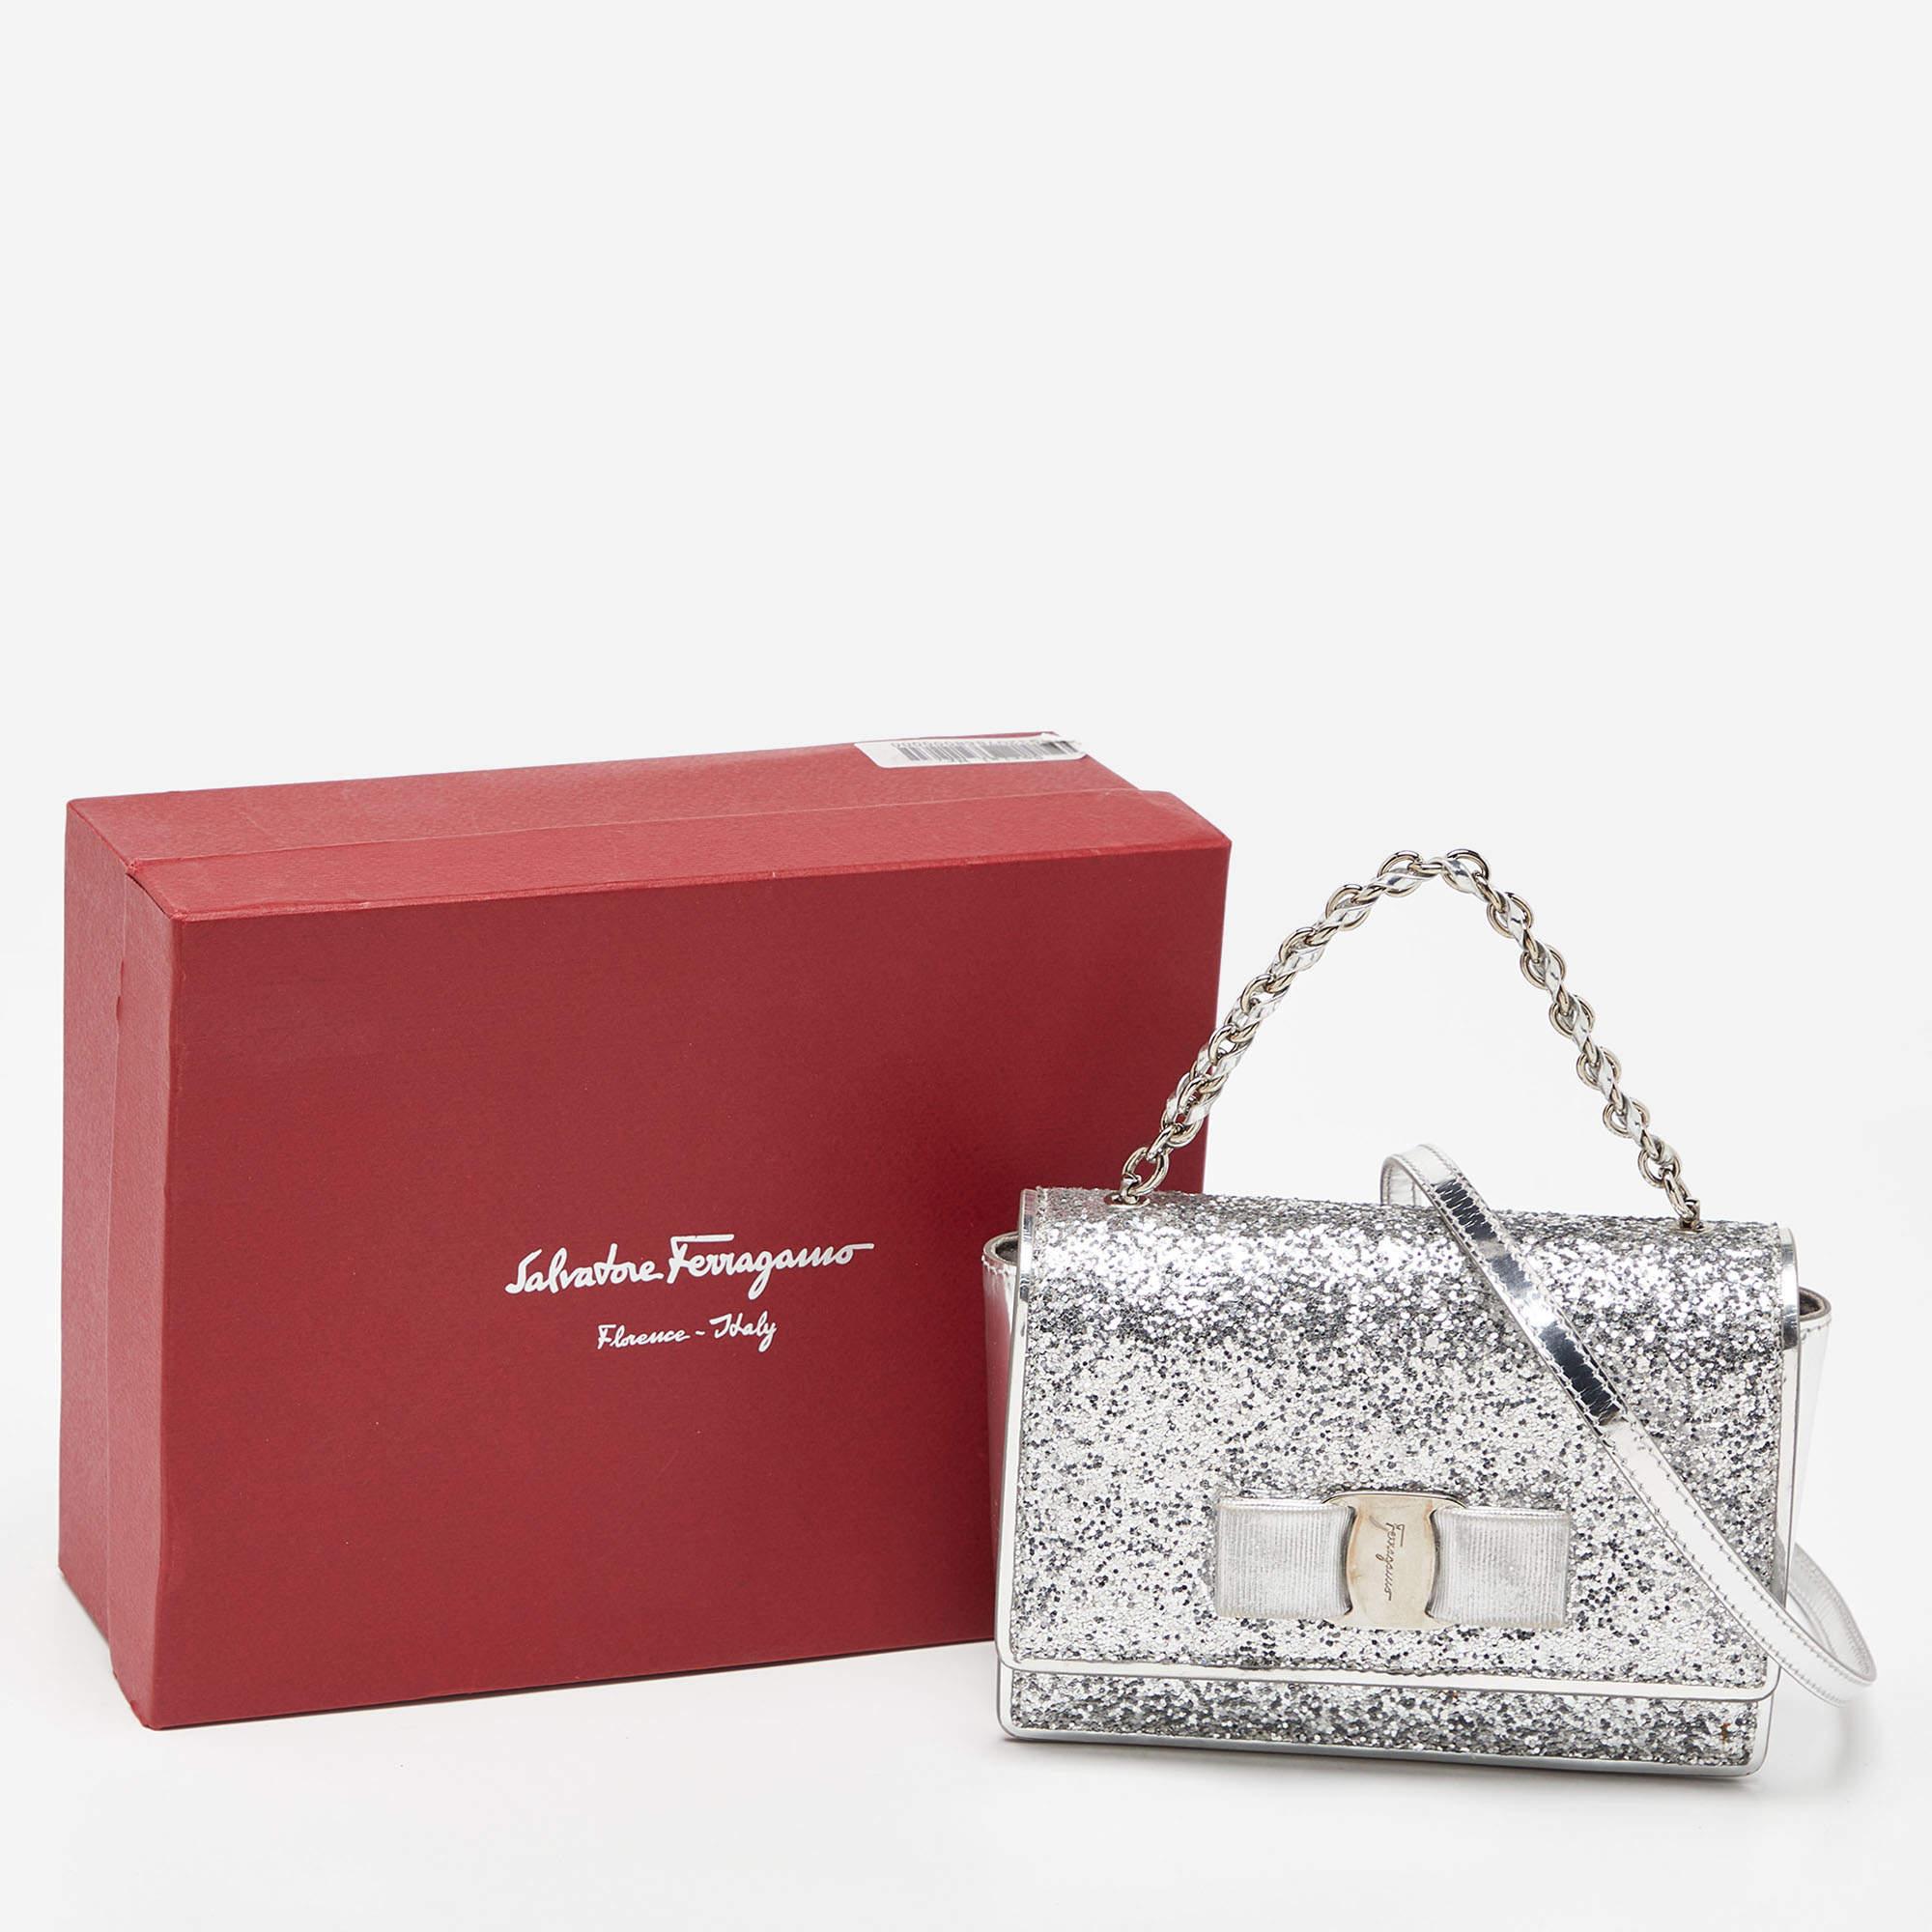 Salvatore Ferragamo Silver Glitter and Laminated Leather Top Handle Bag 9